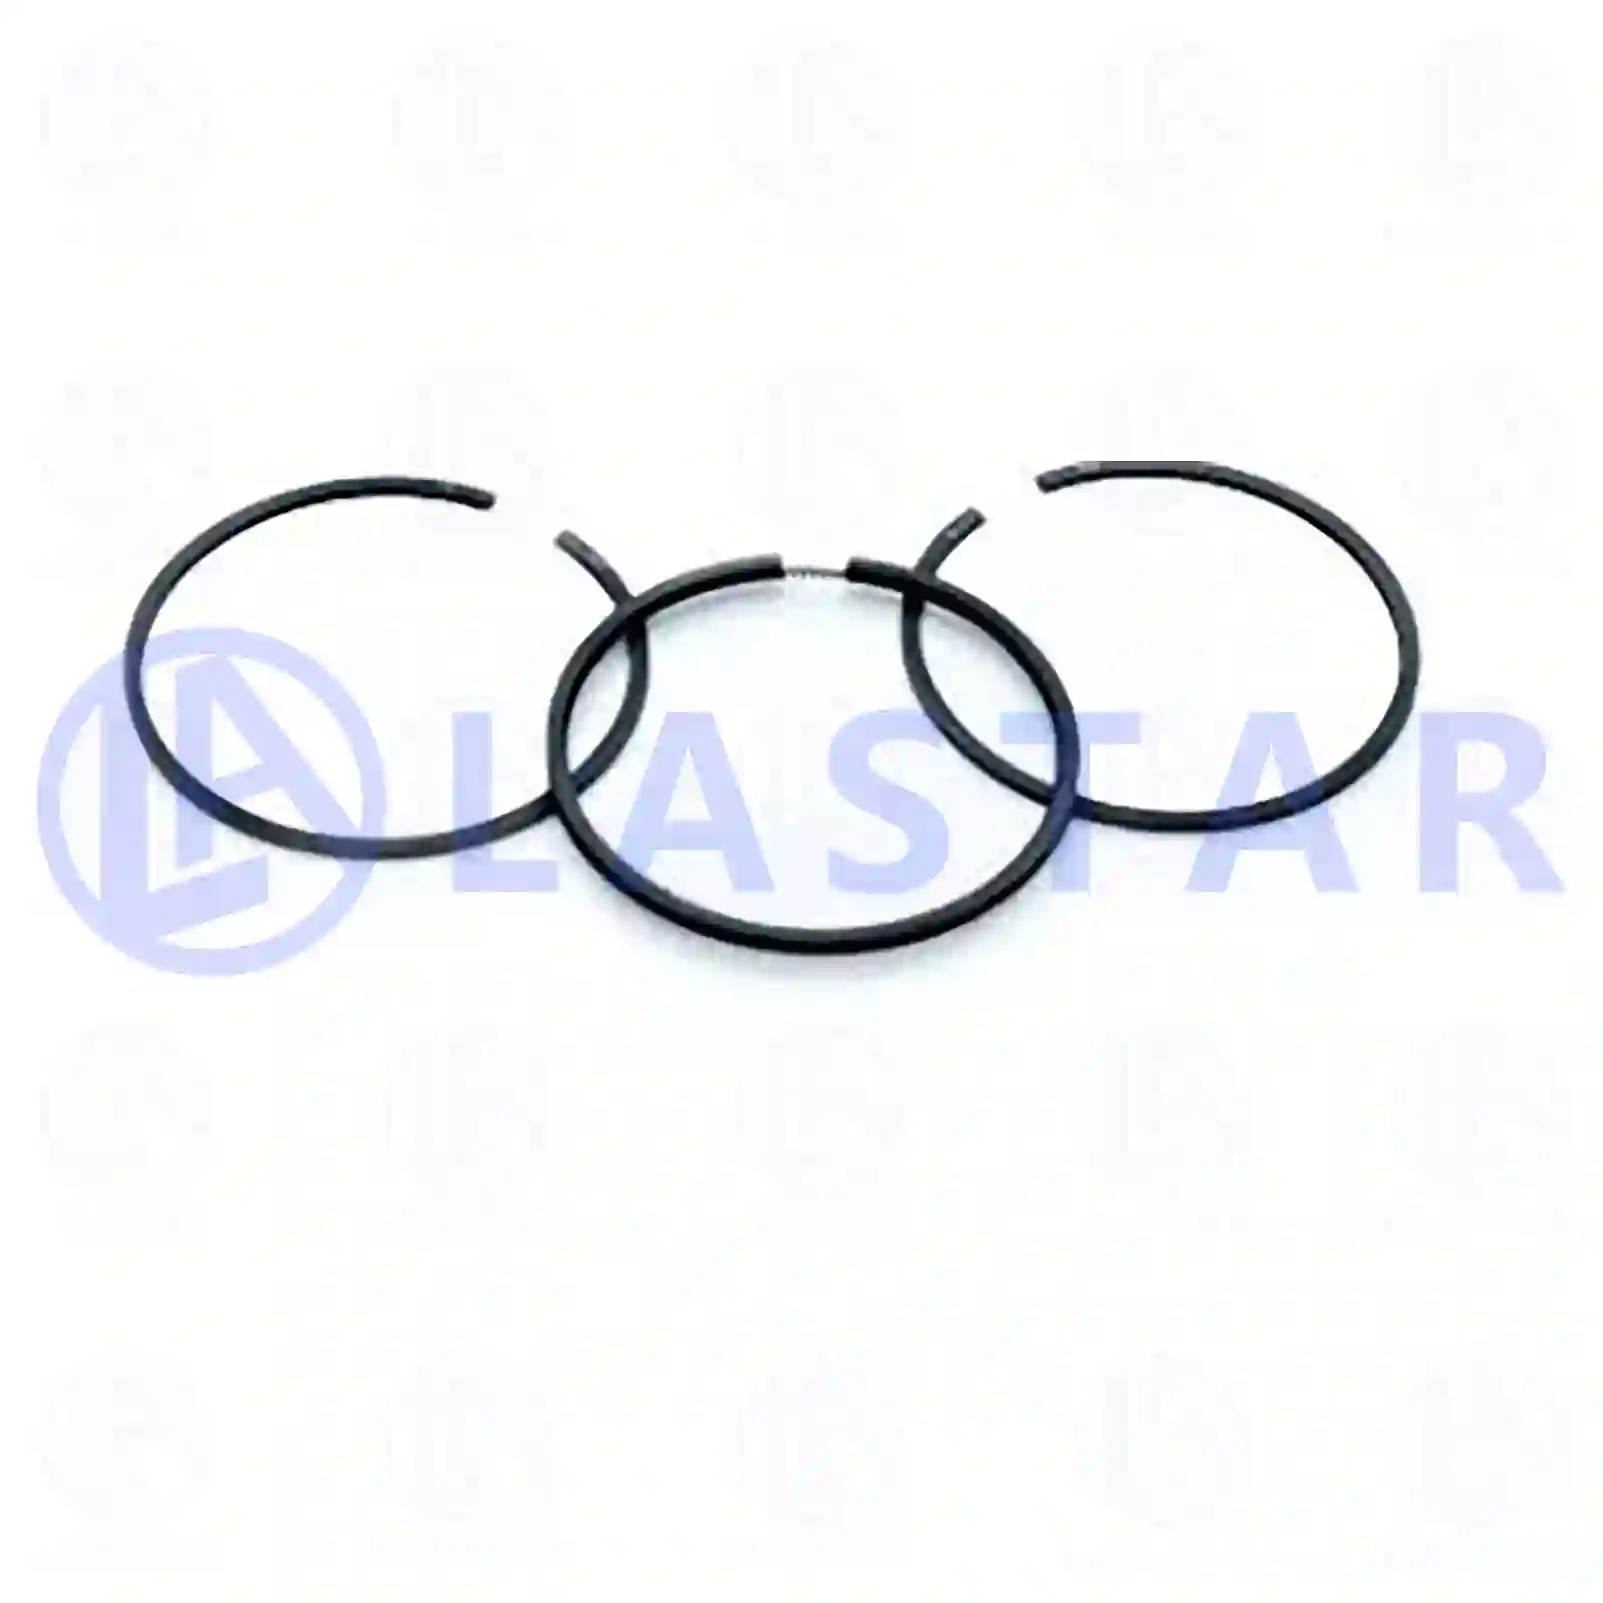  Piston ring kit, Compressor || Lastar Spare Part | Truck Spare Parts, Auotomotive Spare Parts